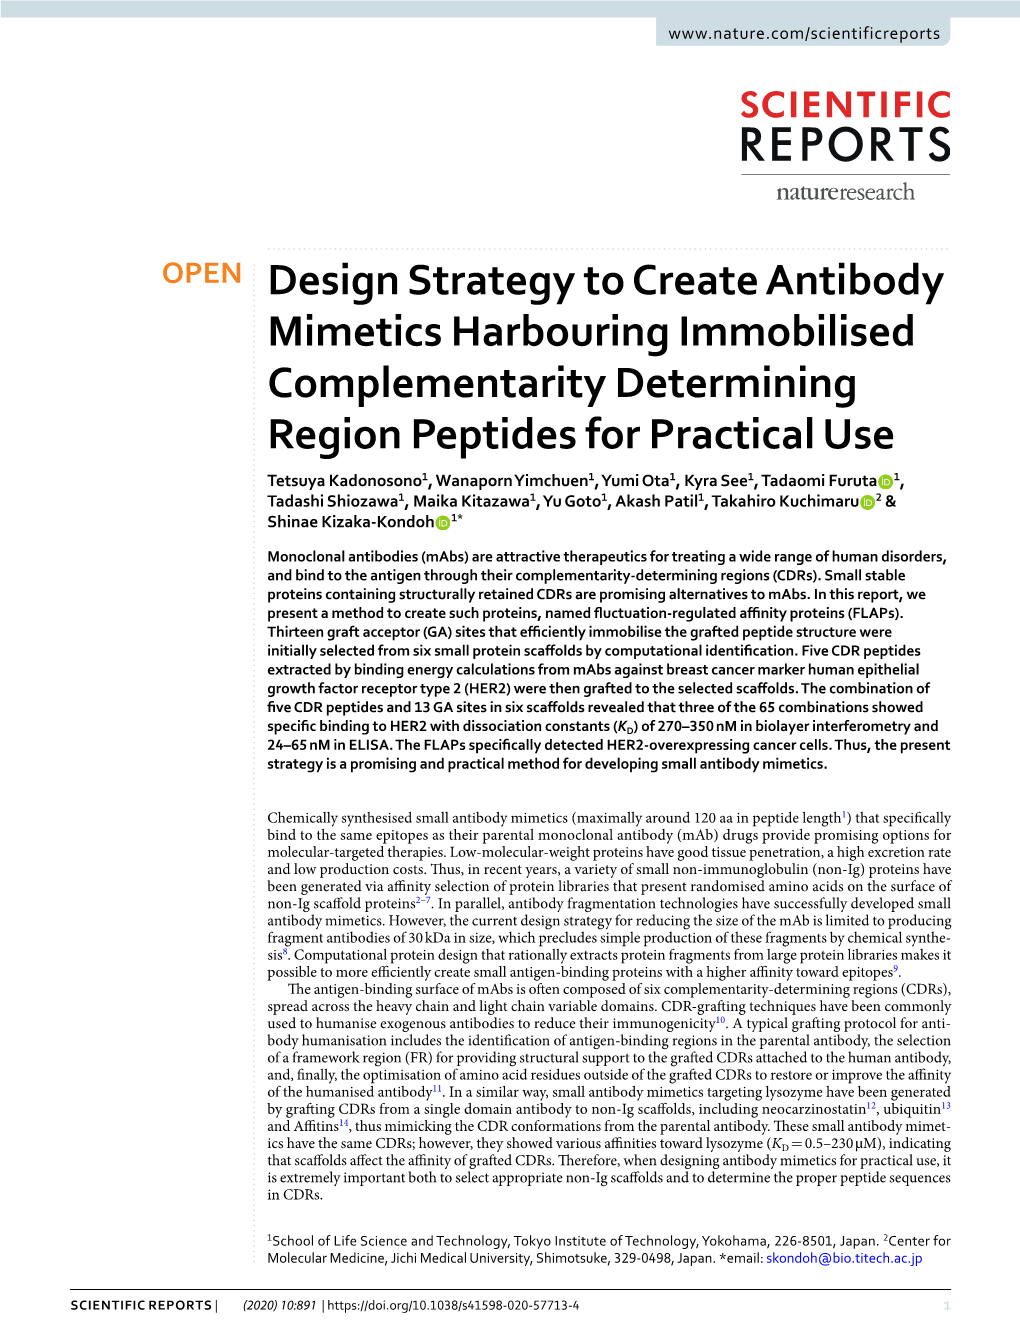 Design Strategy to Create Antibody Mimetics Harbouring Immobilised